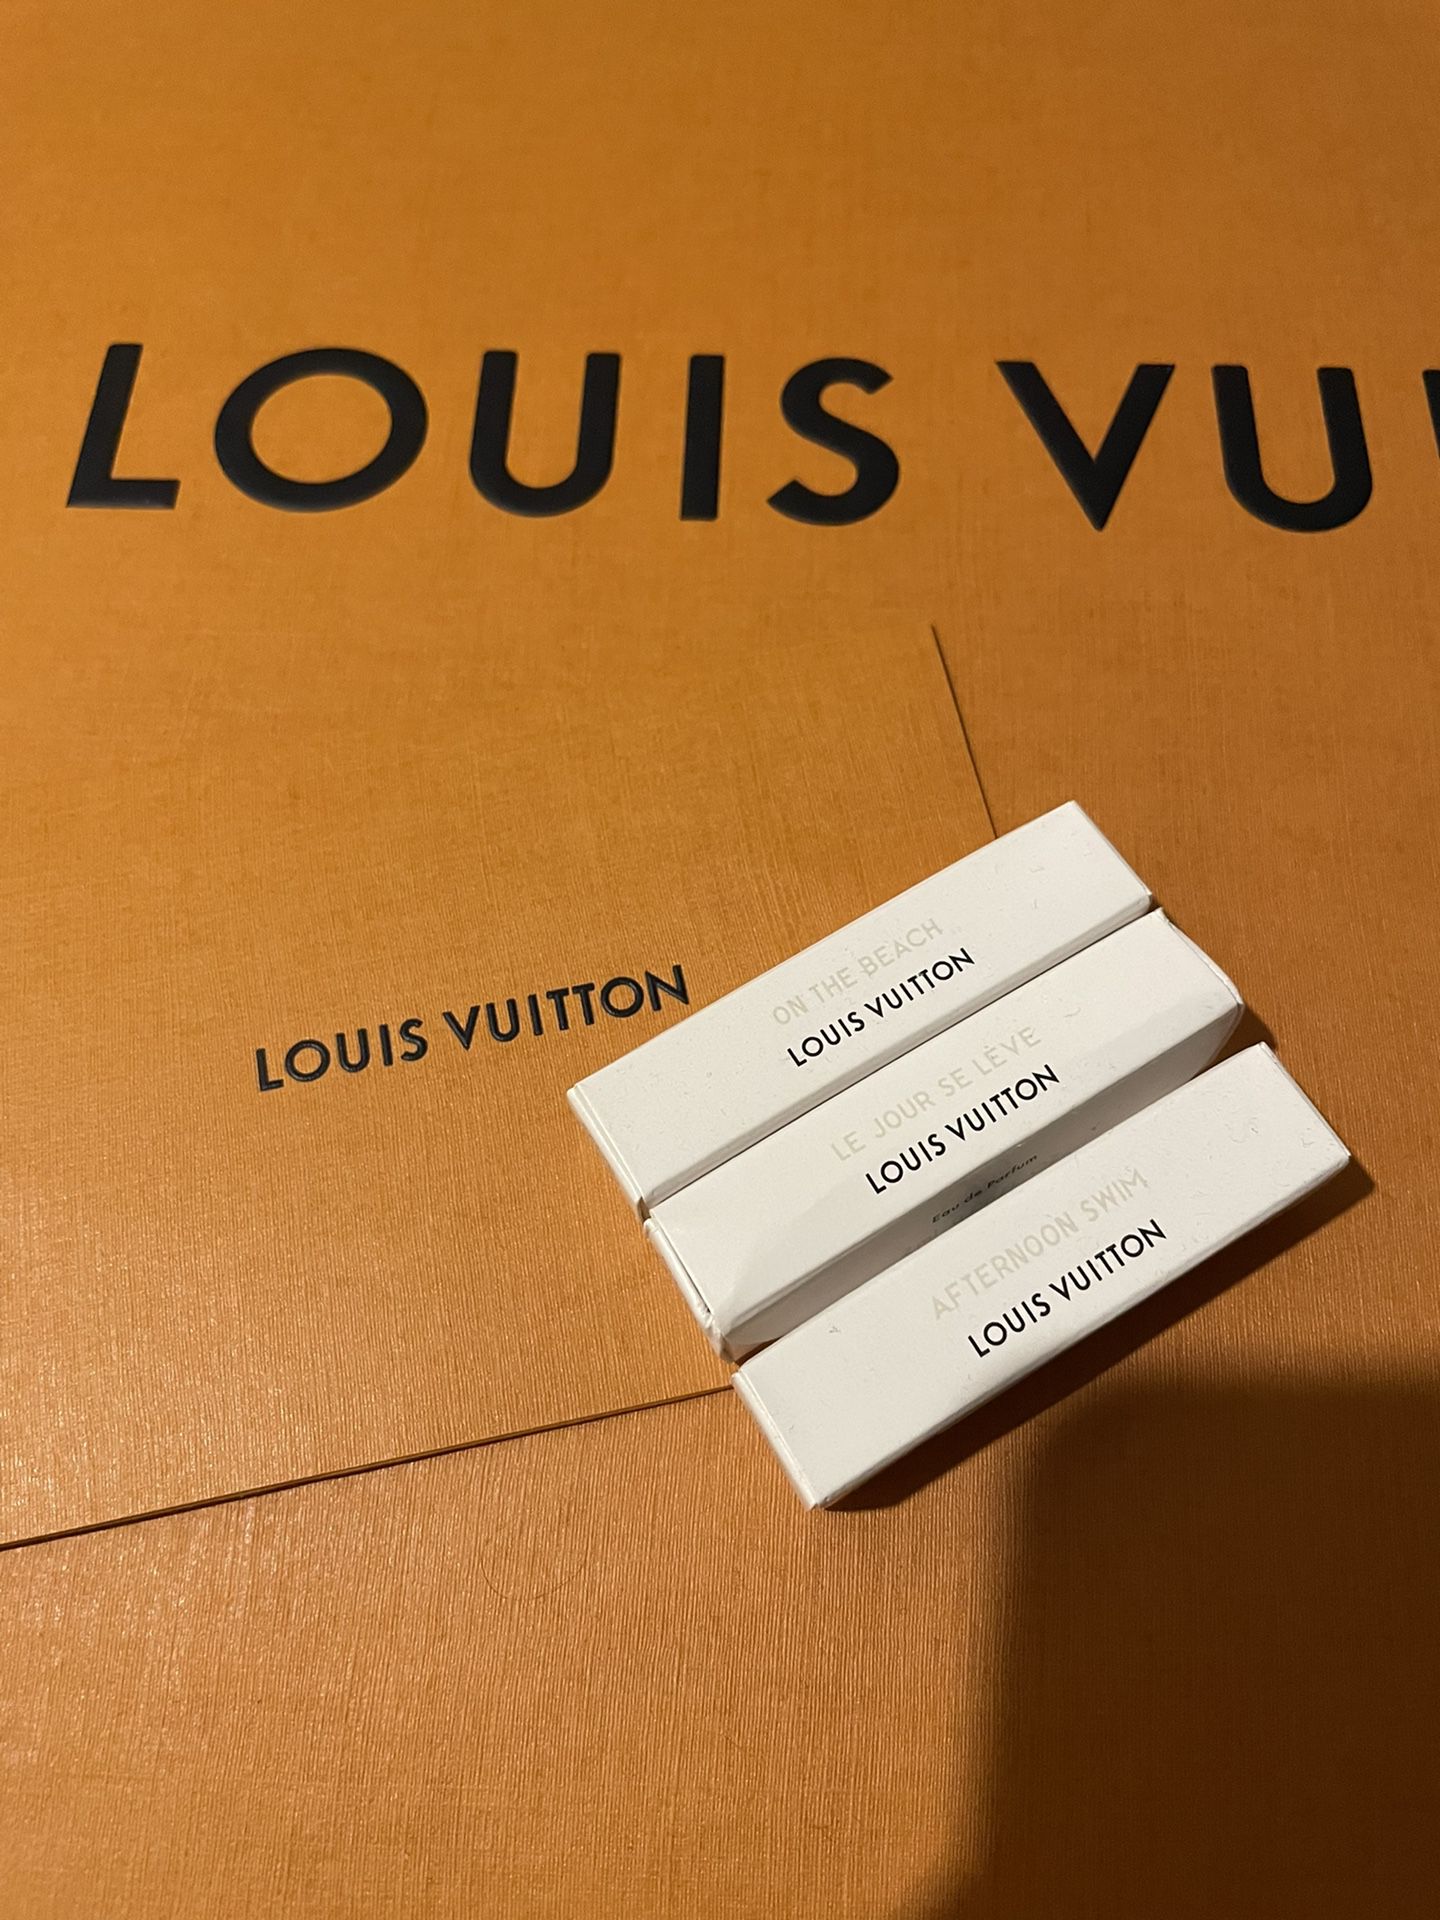 Louis Vuitton Afternoon Swim, Perfume Sample